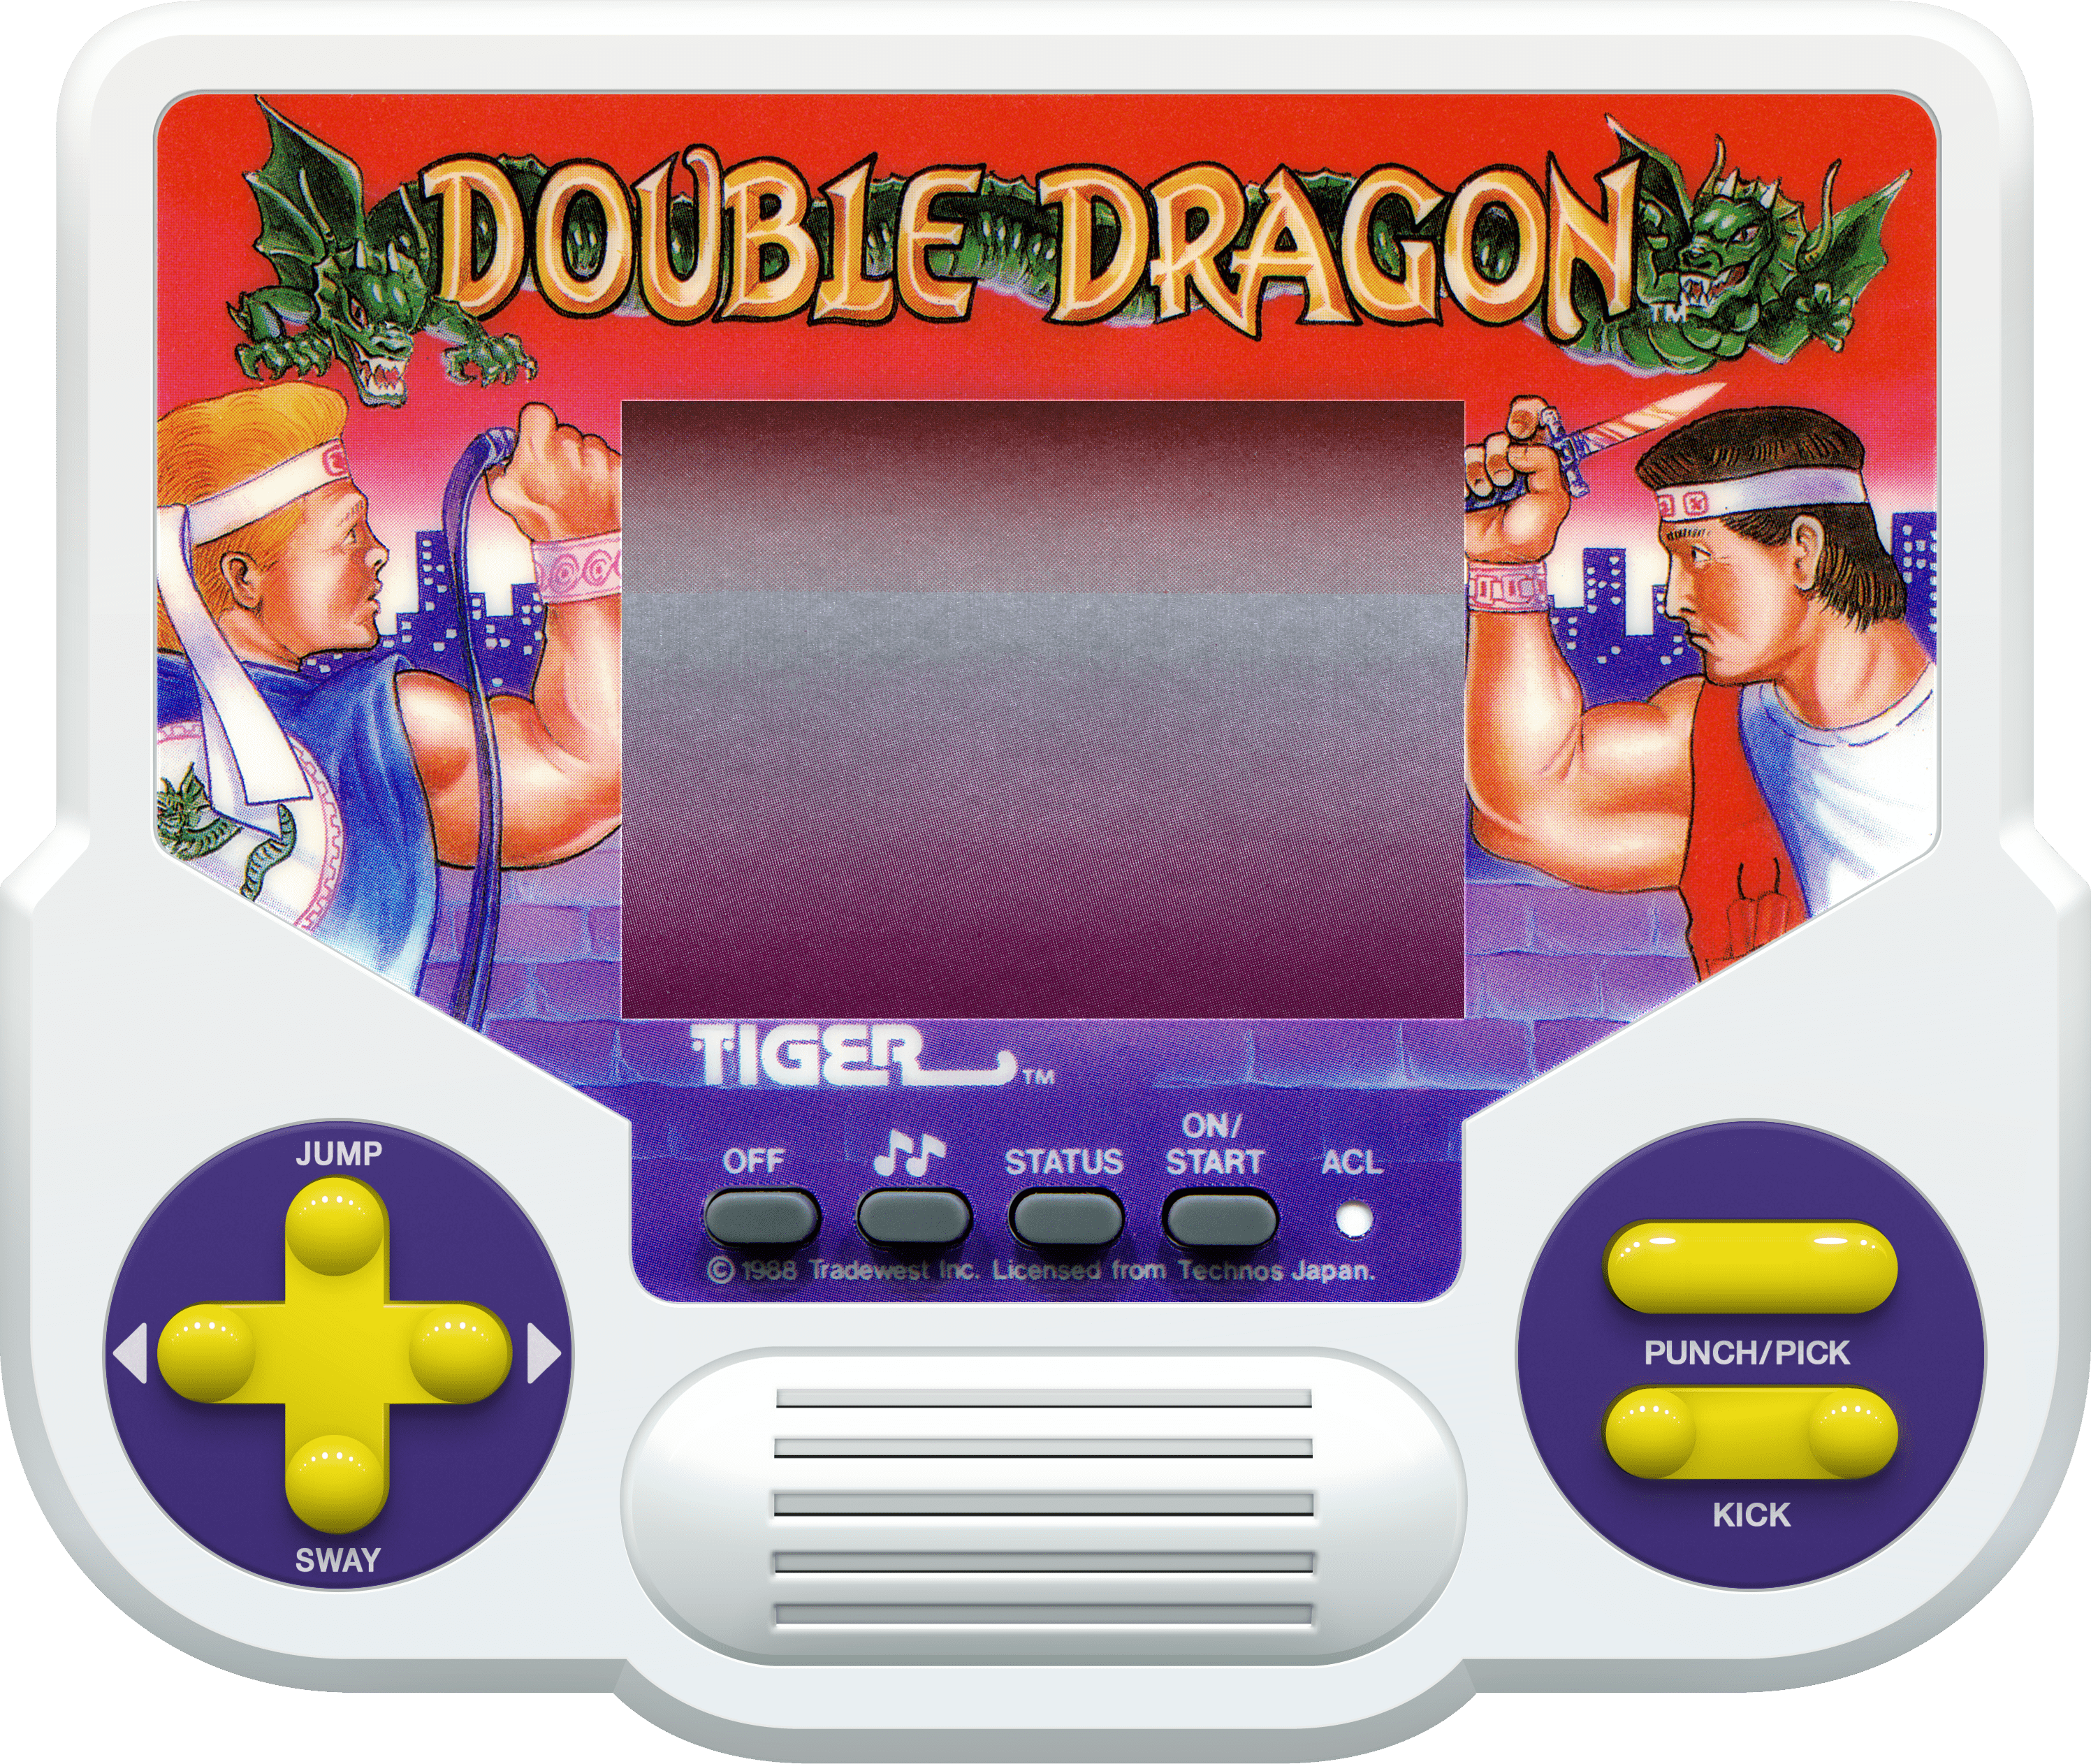 Double Dragon V: The Shadow Falls, Double Dragon Wiki